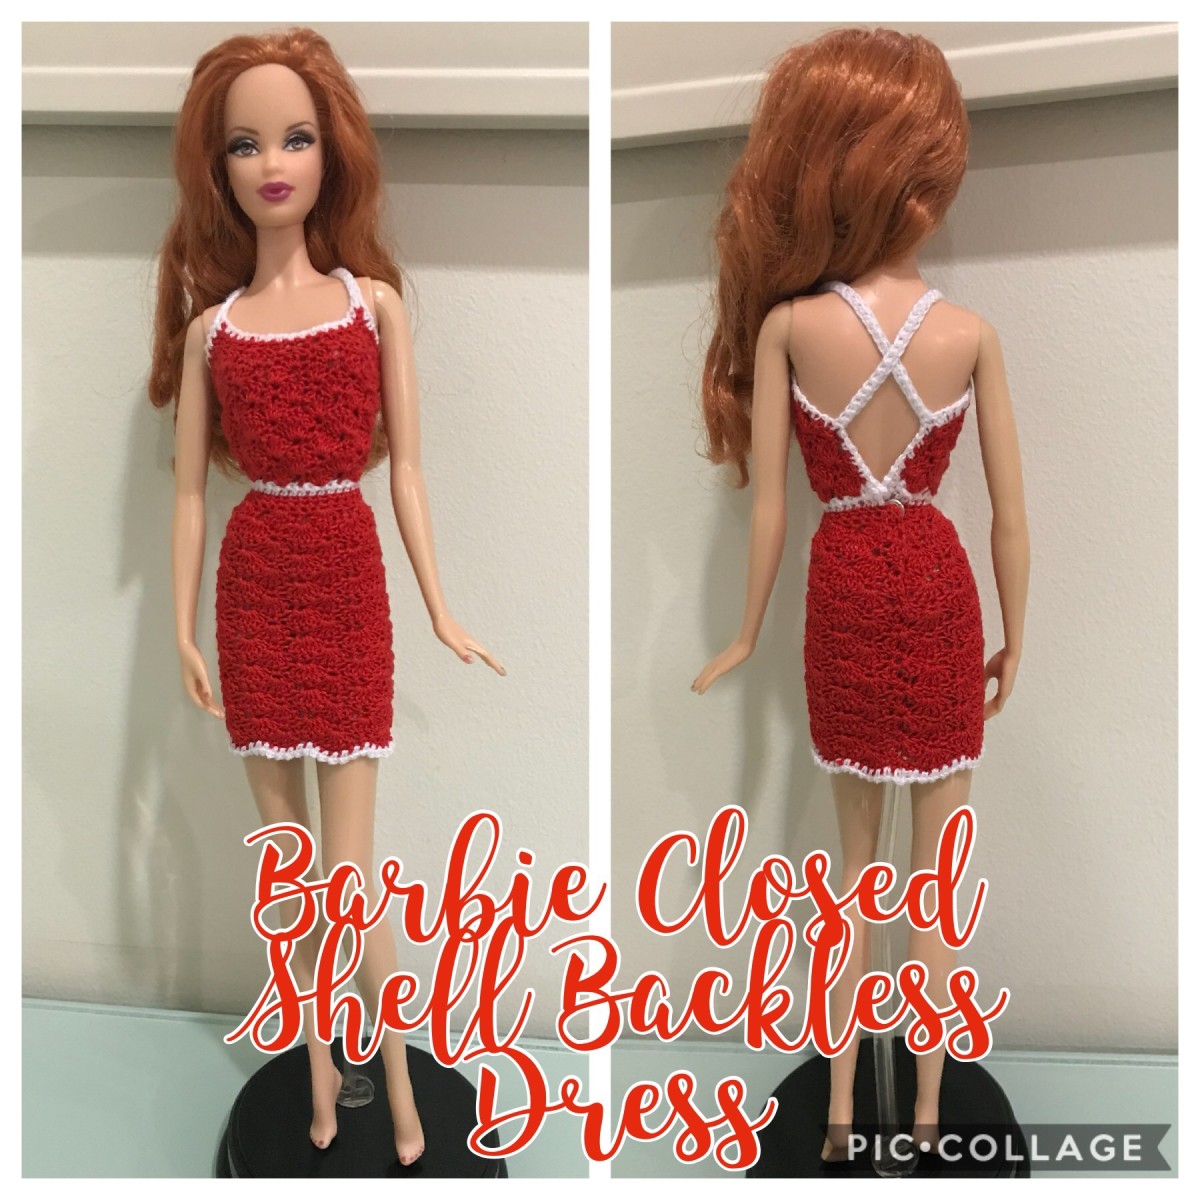 Barbie Closed Shell Backless Dress